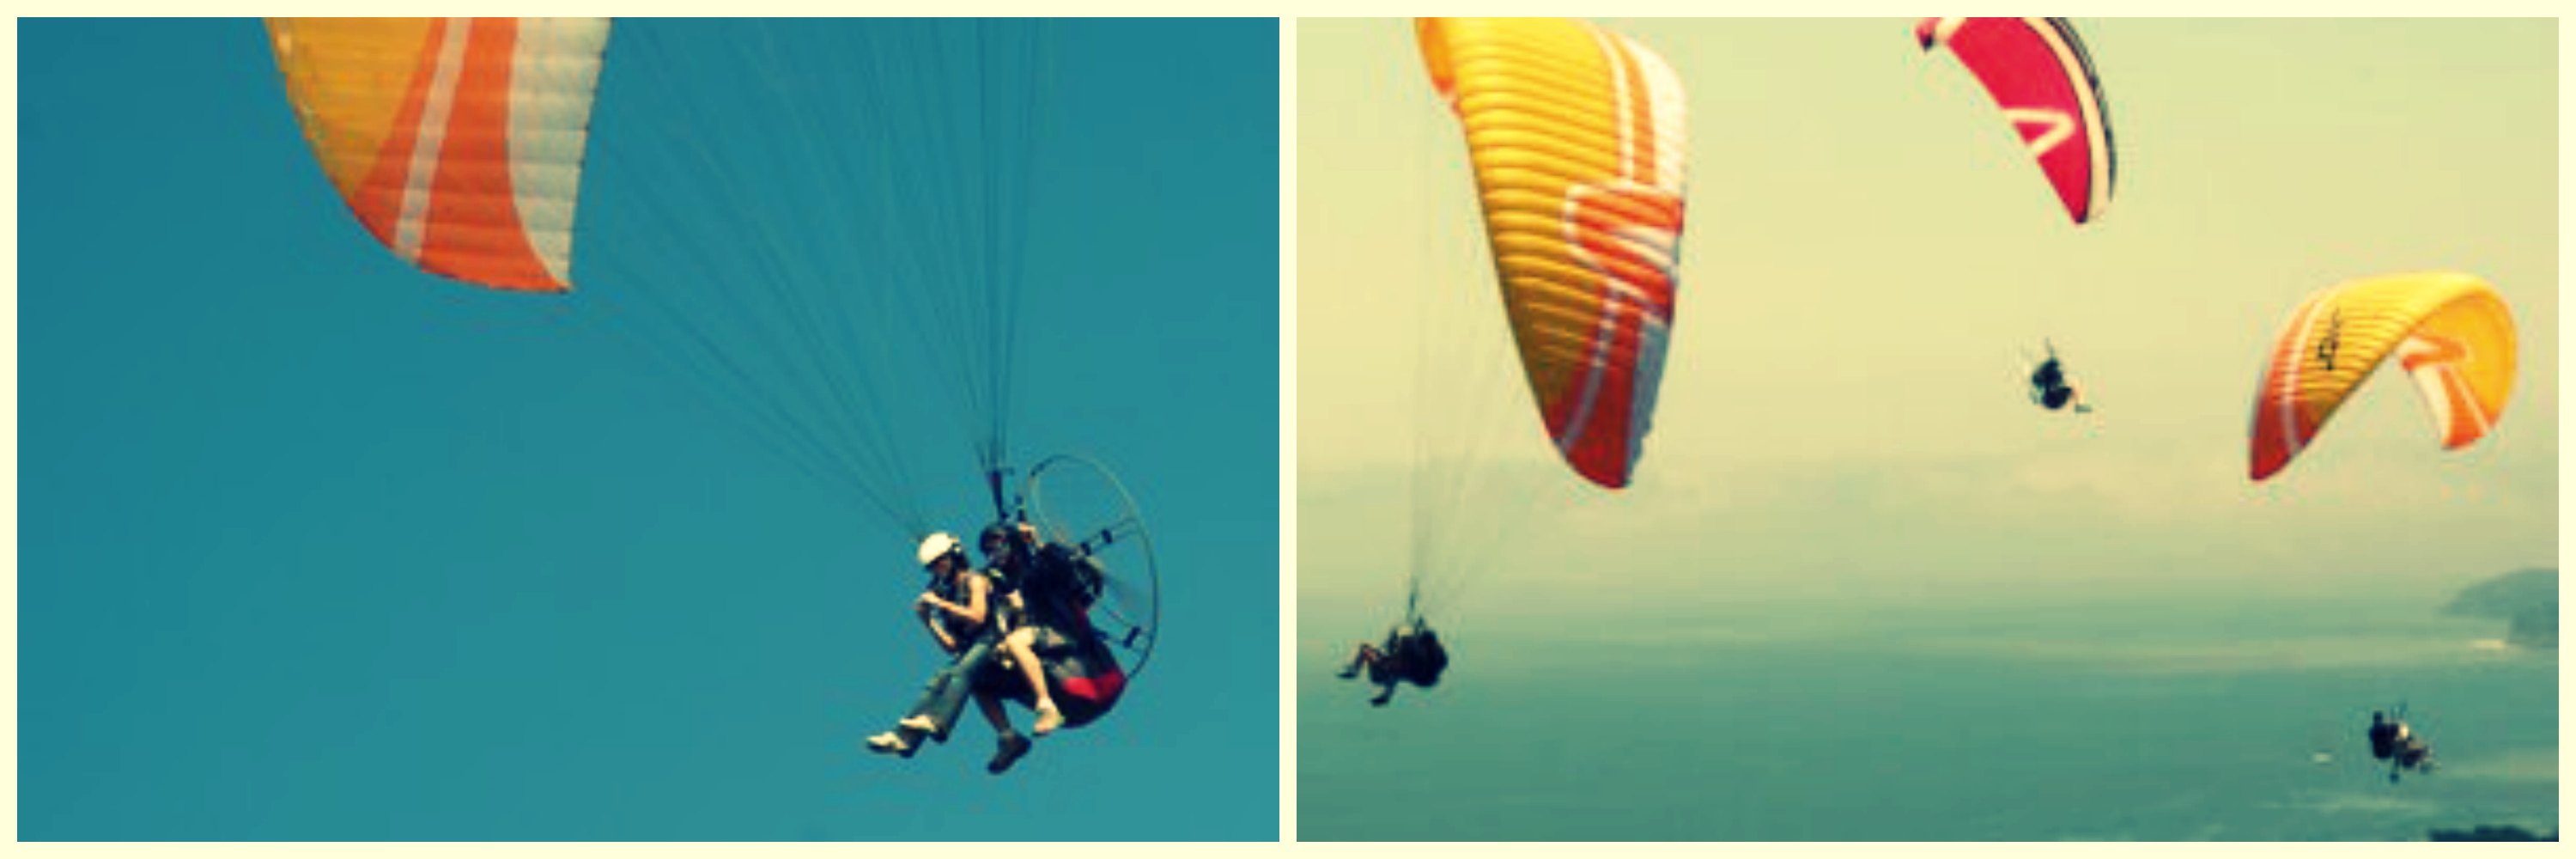 Paragliding in Malibu 9